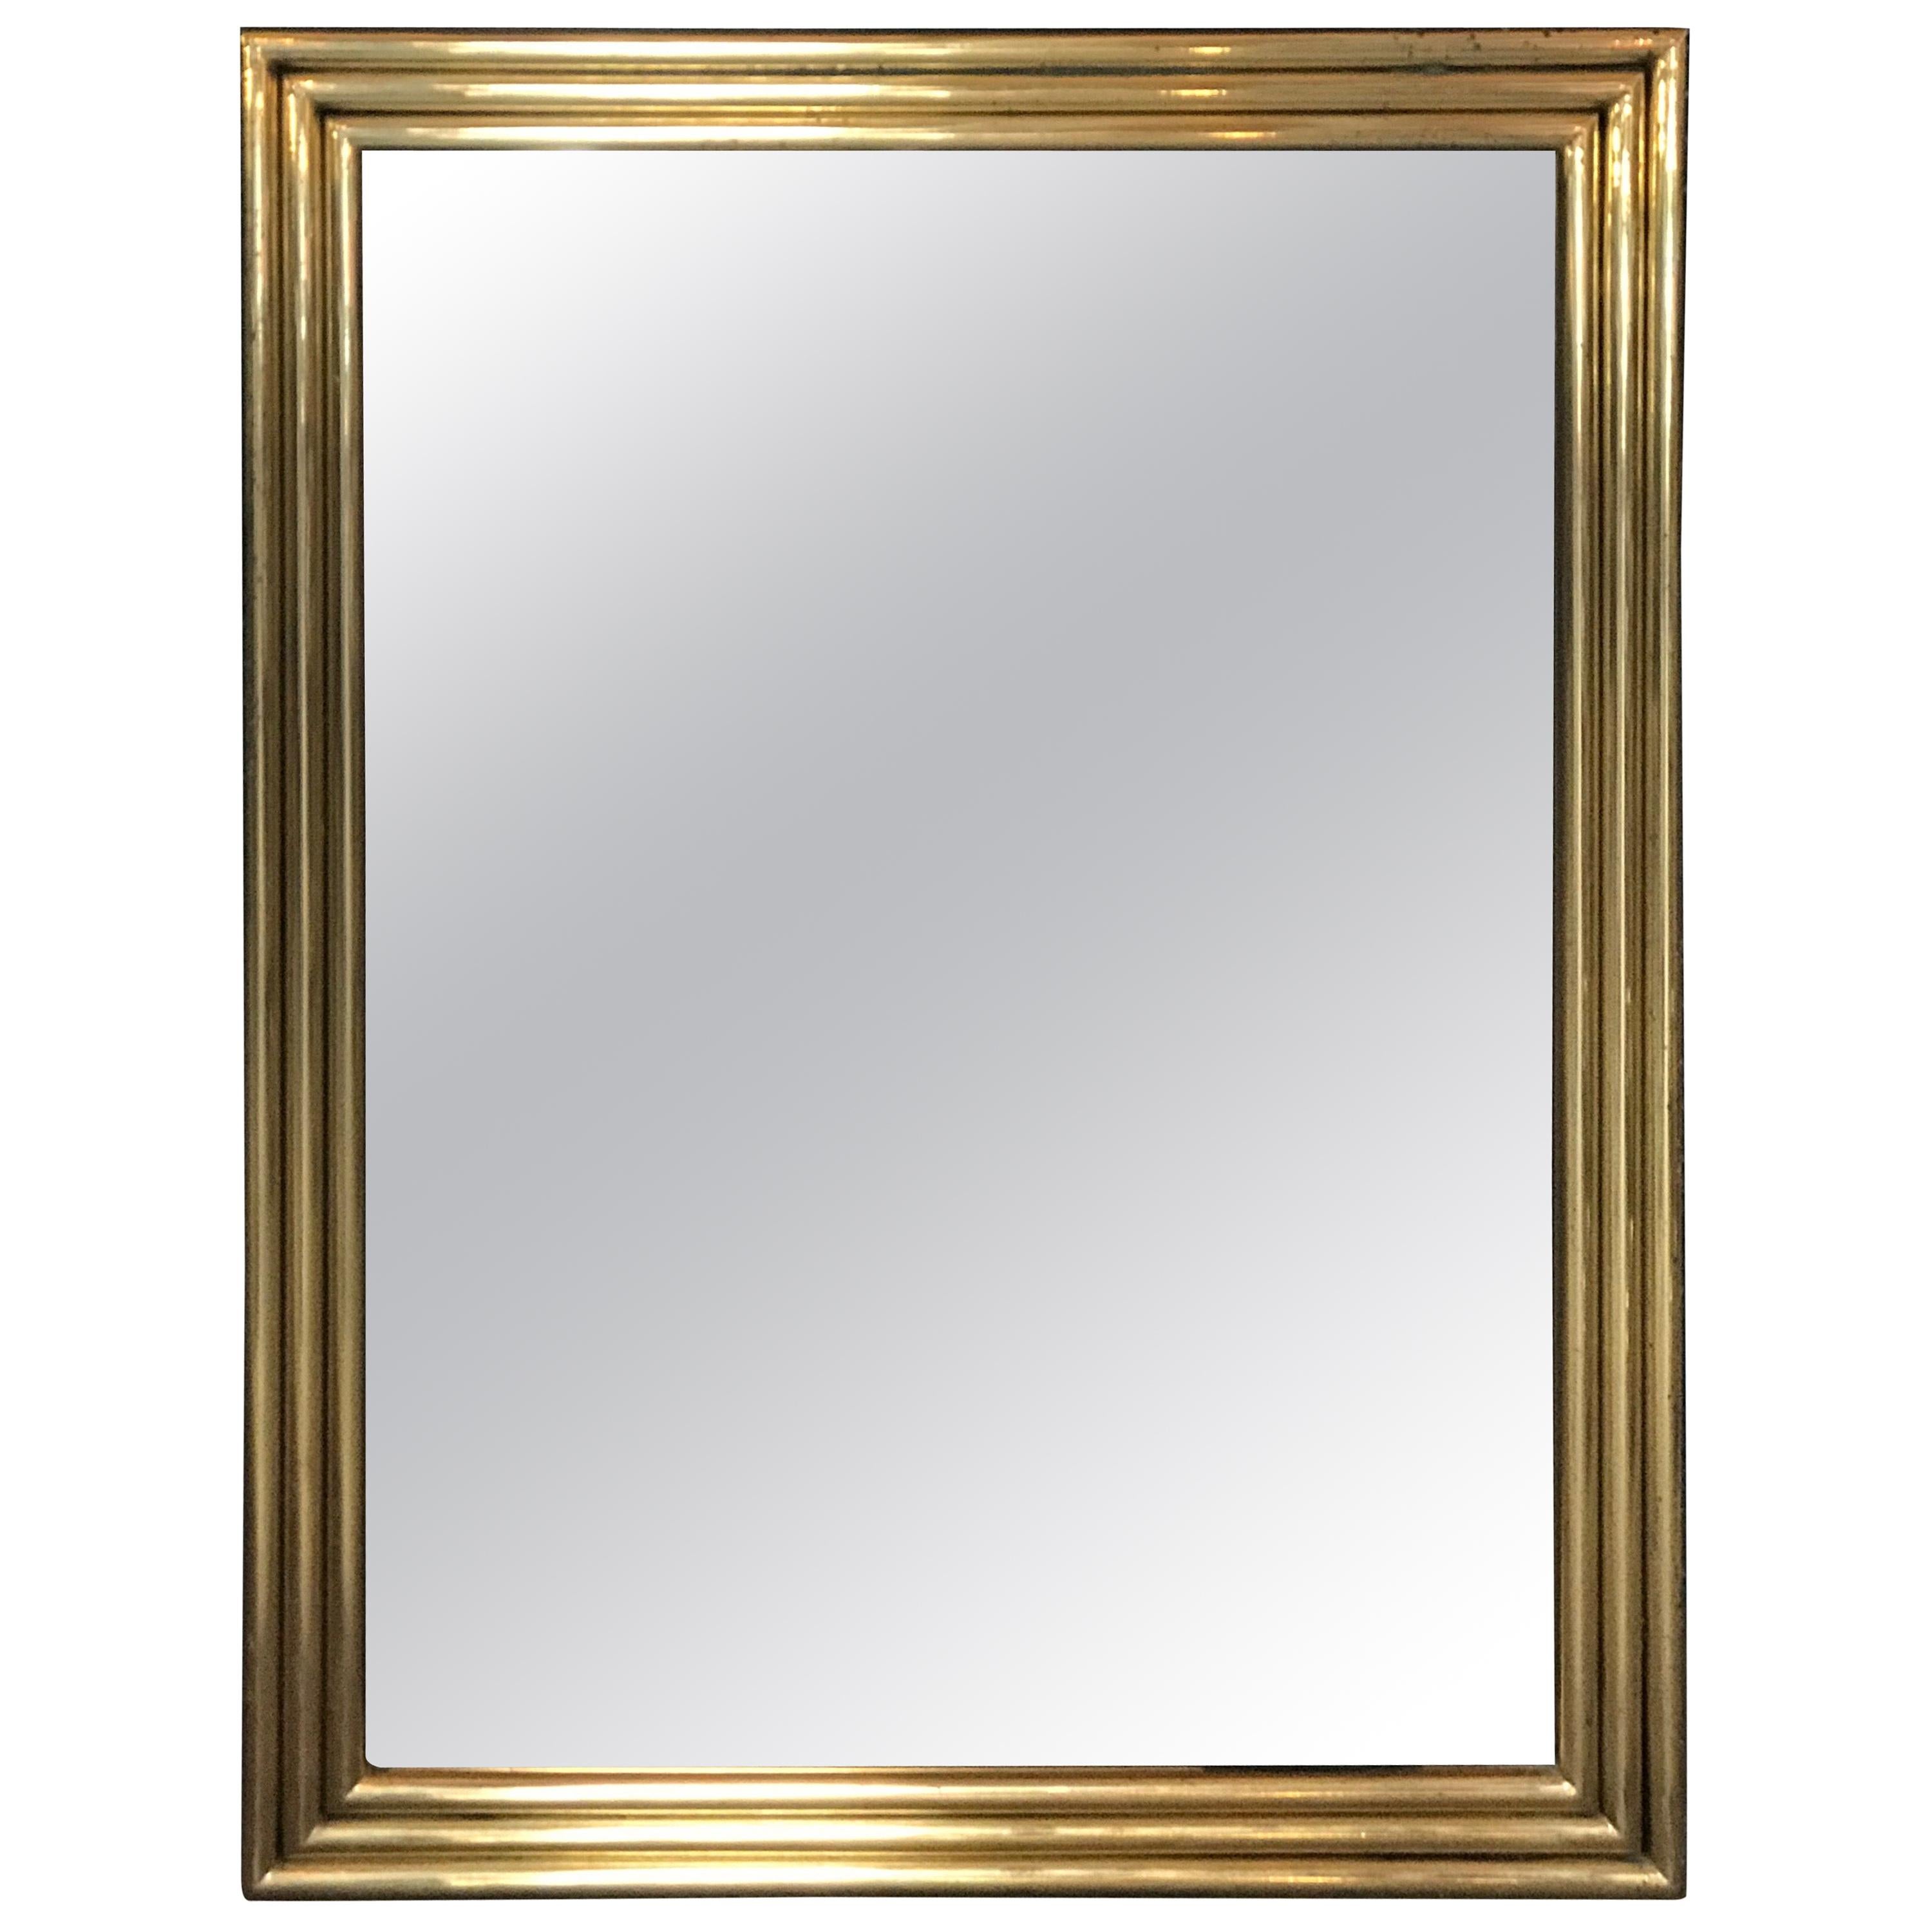 Italian Large Midcentury Mirror with Brass Surround